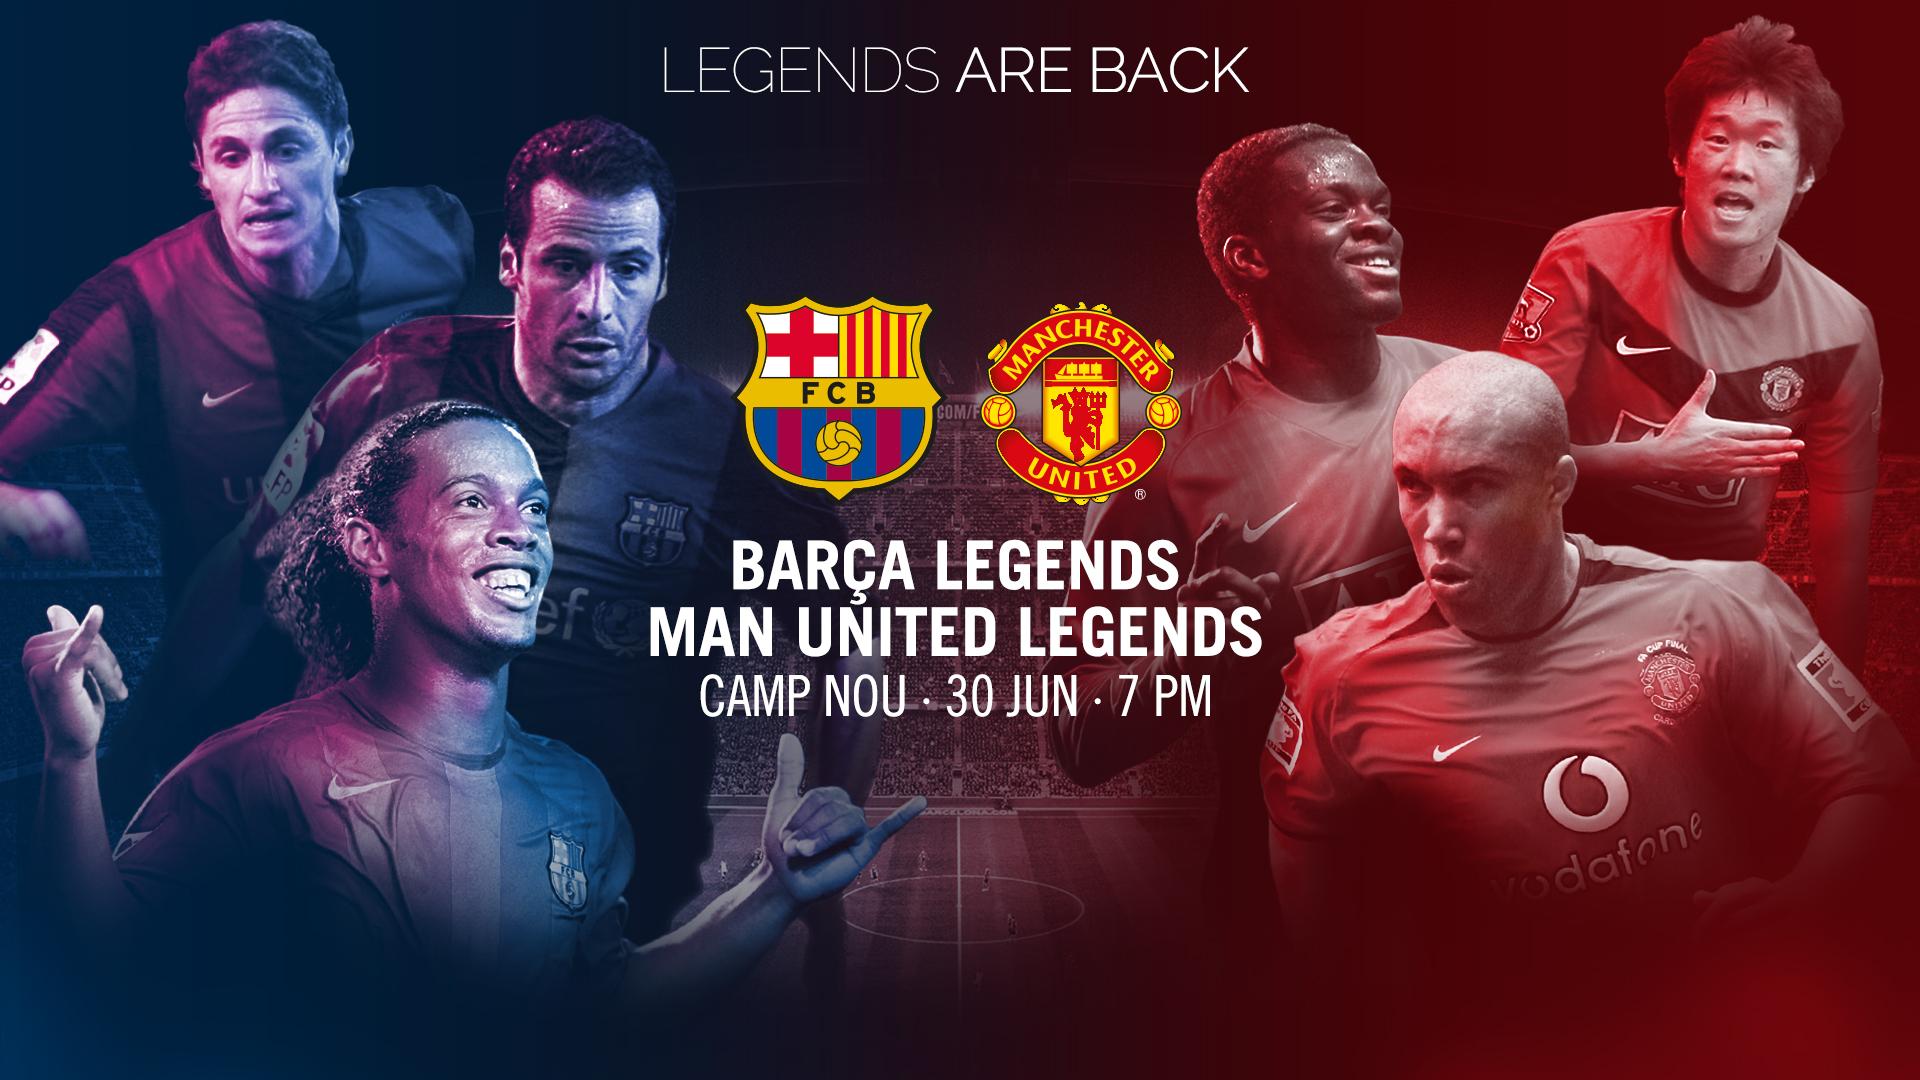 Official poster for the Barça Legends match on 30 June